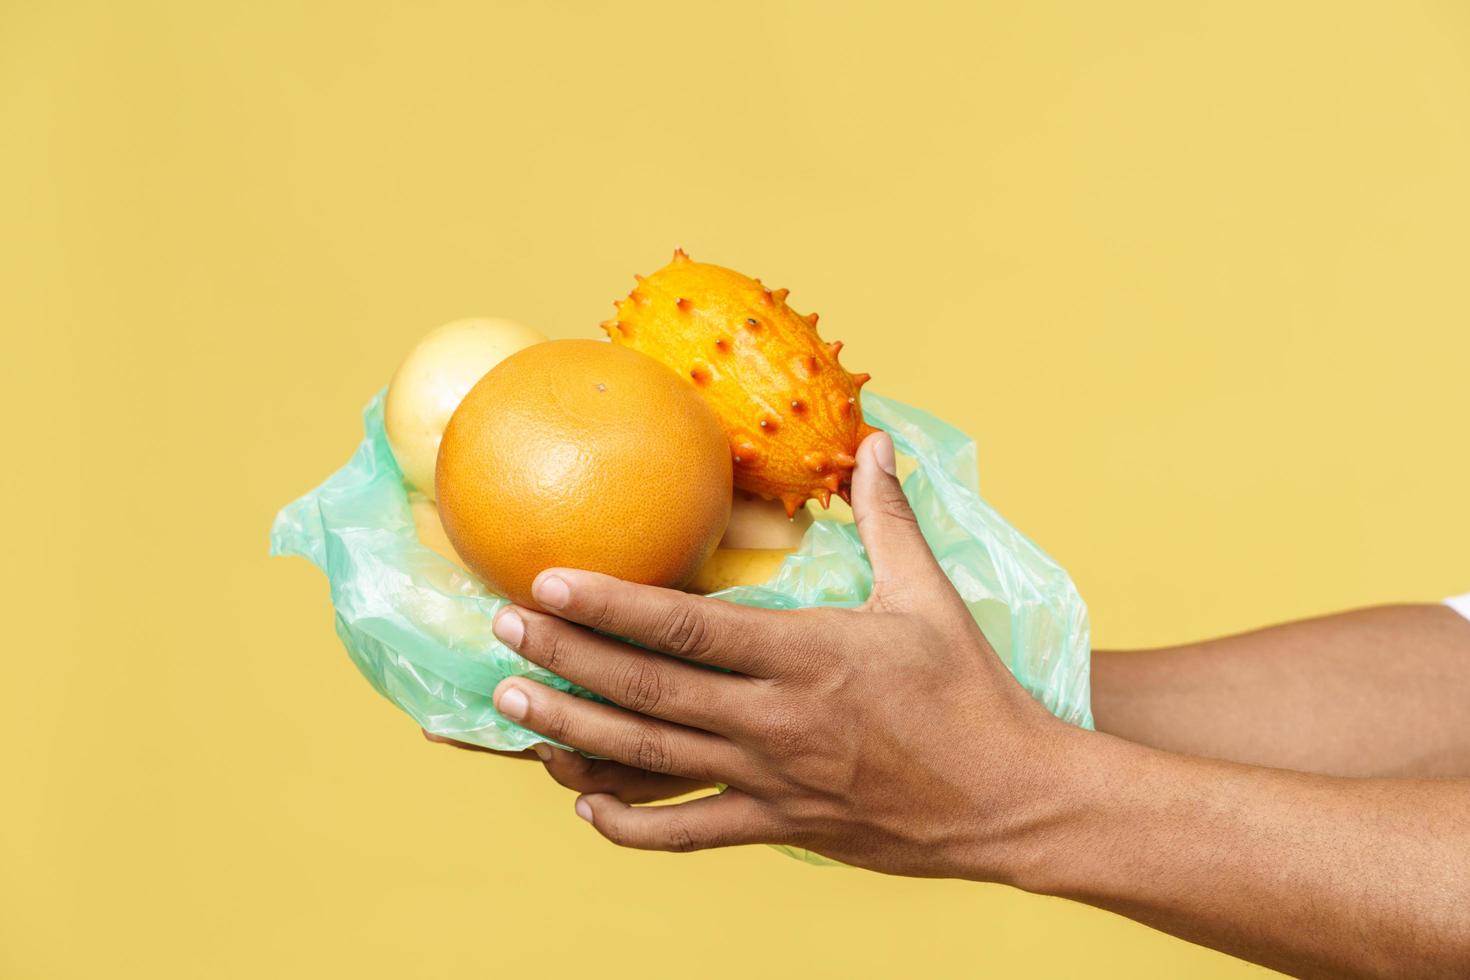 Male hands holding fruit in plastic trash bag photo